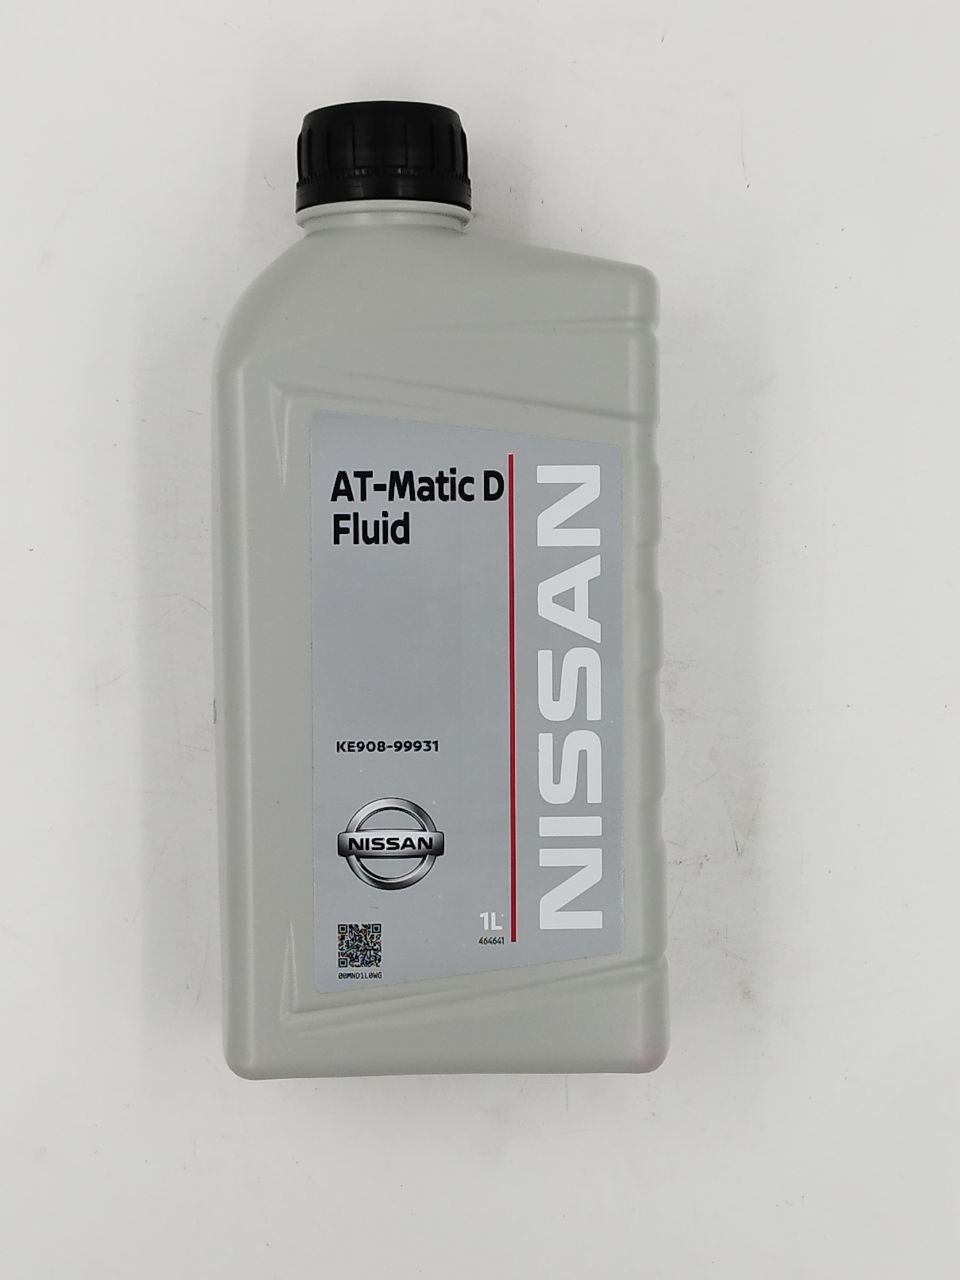 Atf matic j. Nissan matic Fluid d 1 л. Nissan ke908-99931-r. Nissan ATF matic d Fluid. Nissan at-matic d 1л.